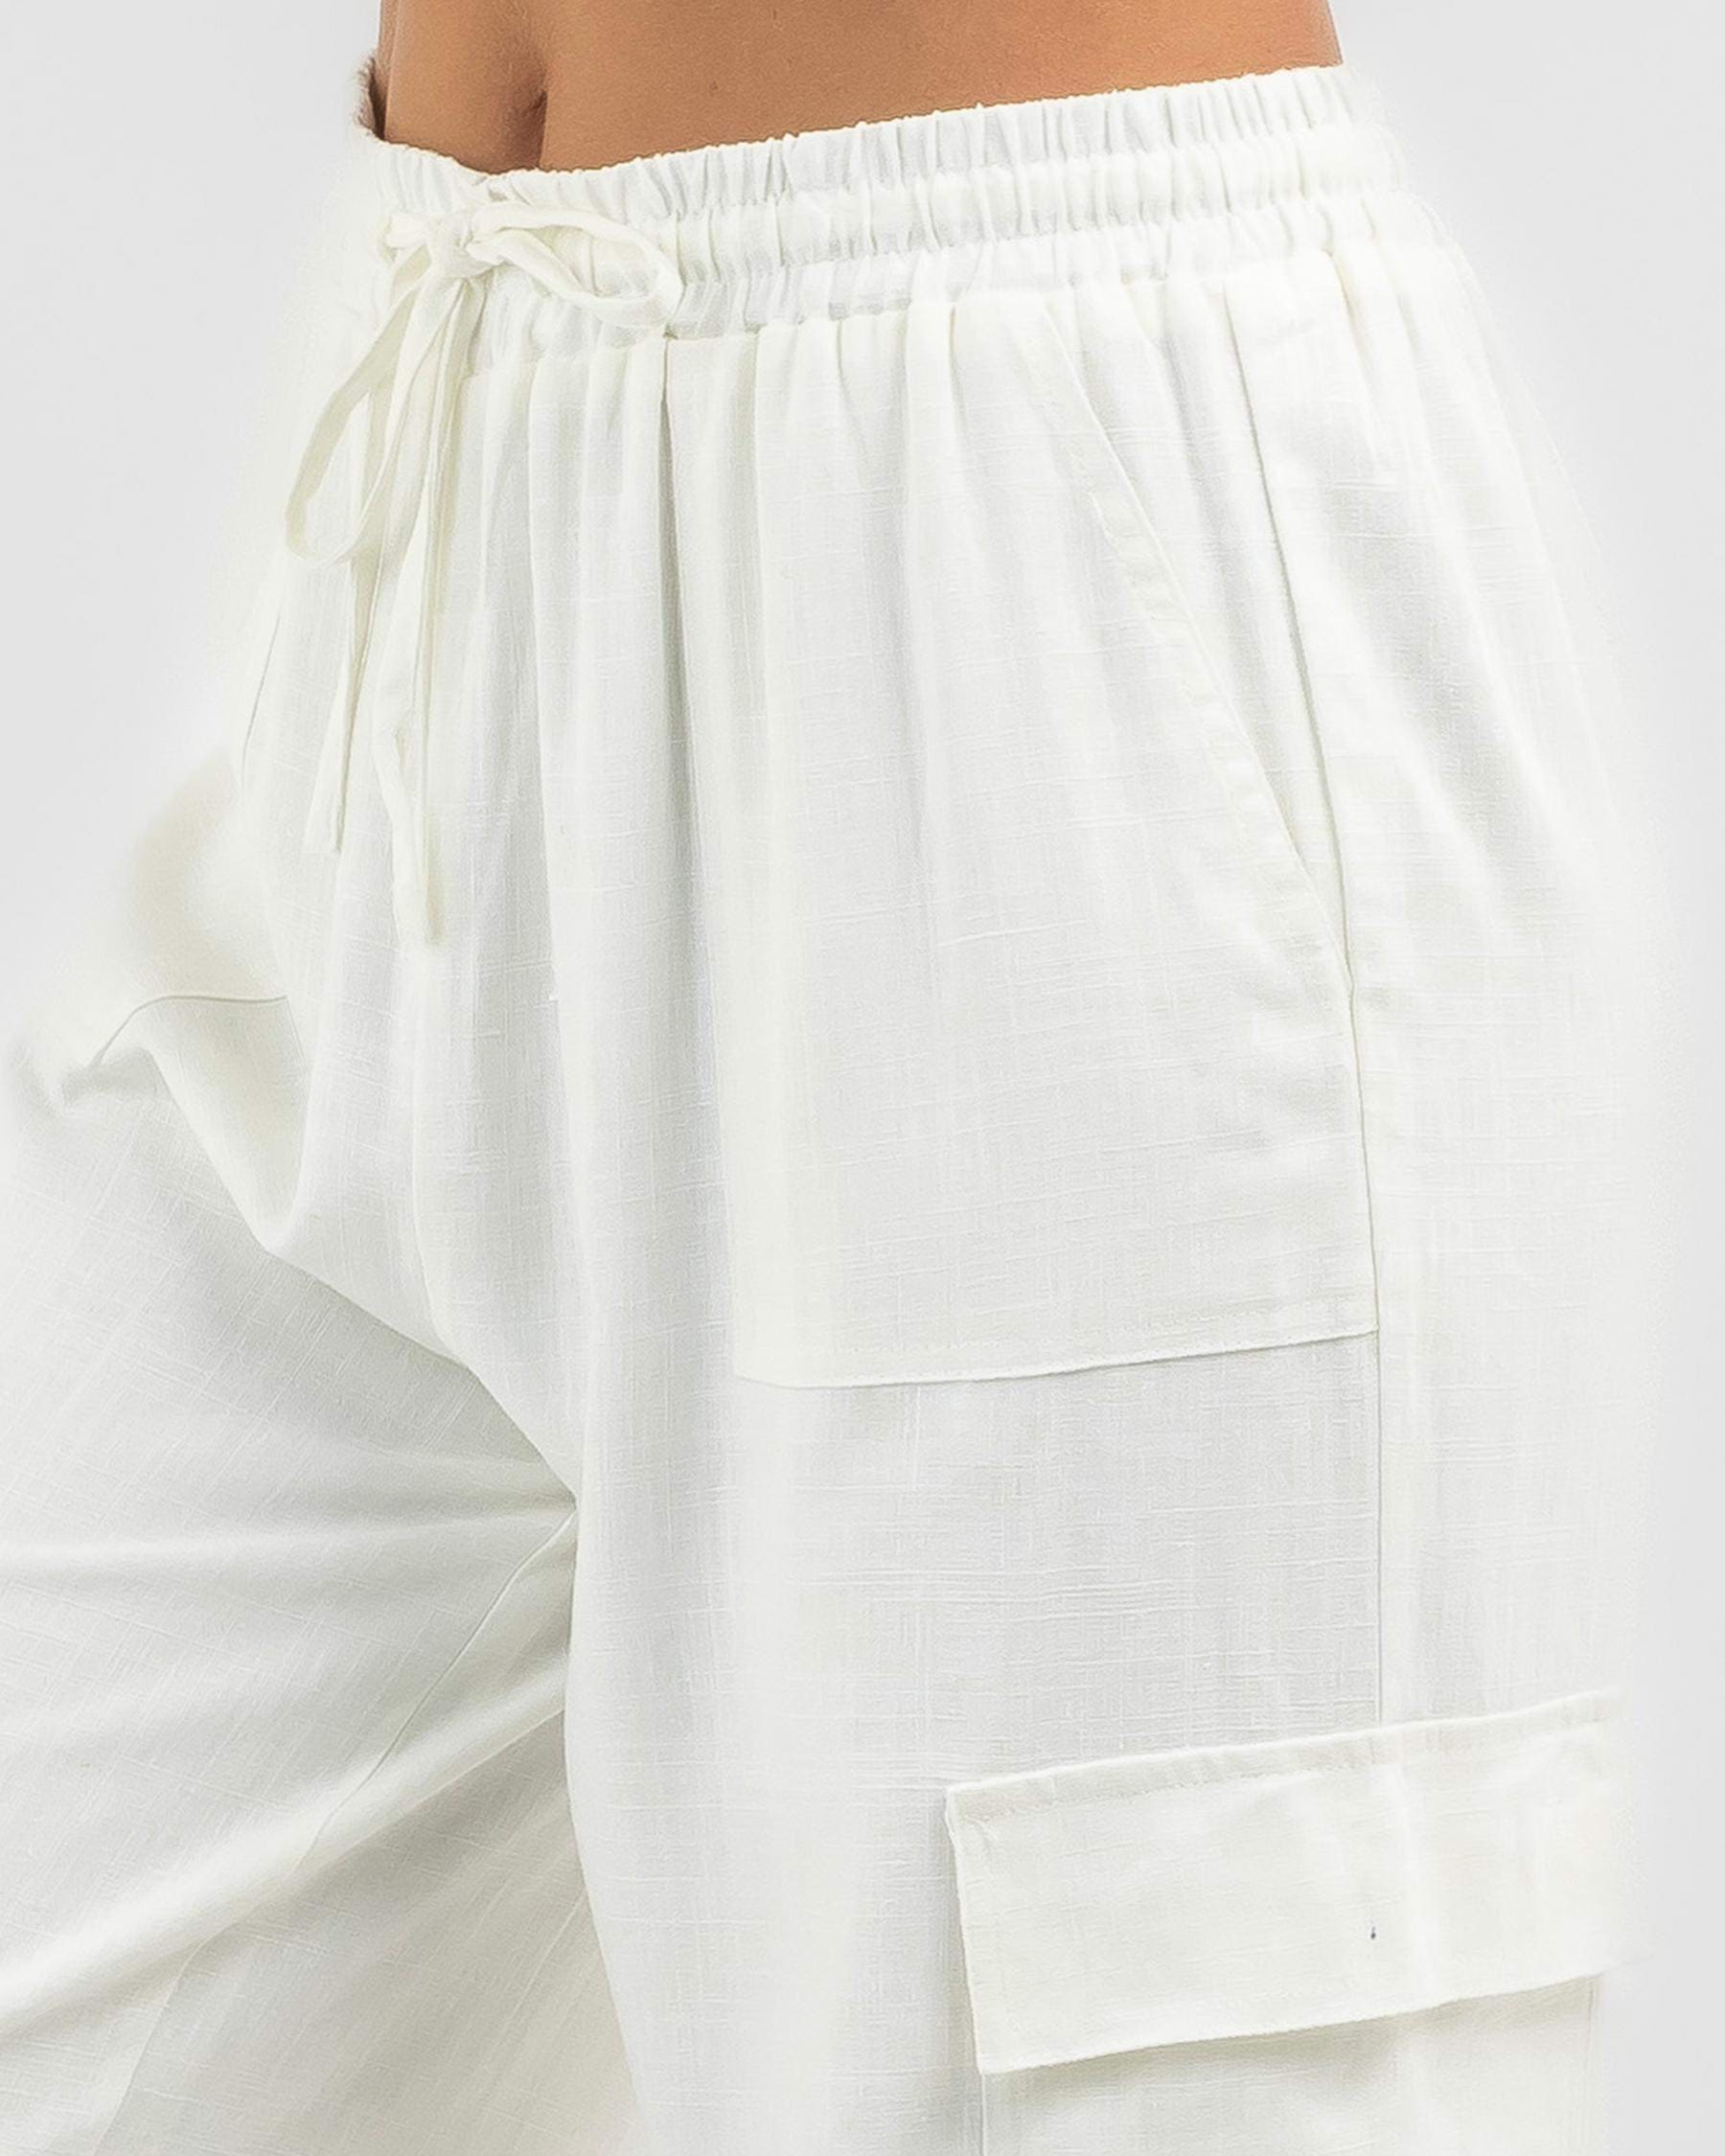 Shop Mooloola Manhattan Beach Pants In White - Fast Shipping & Easy ...